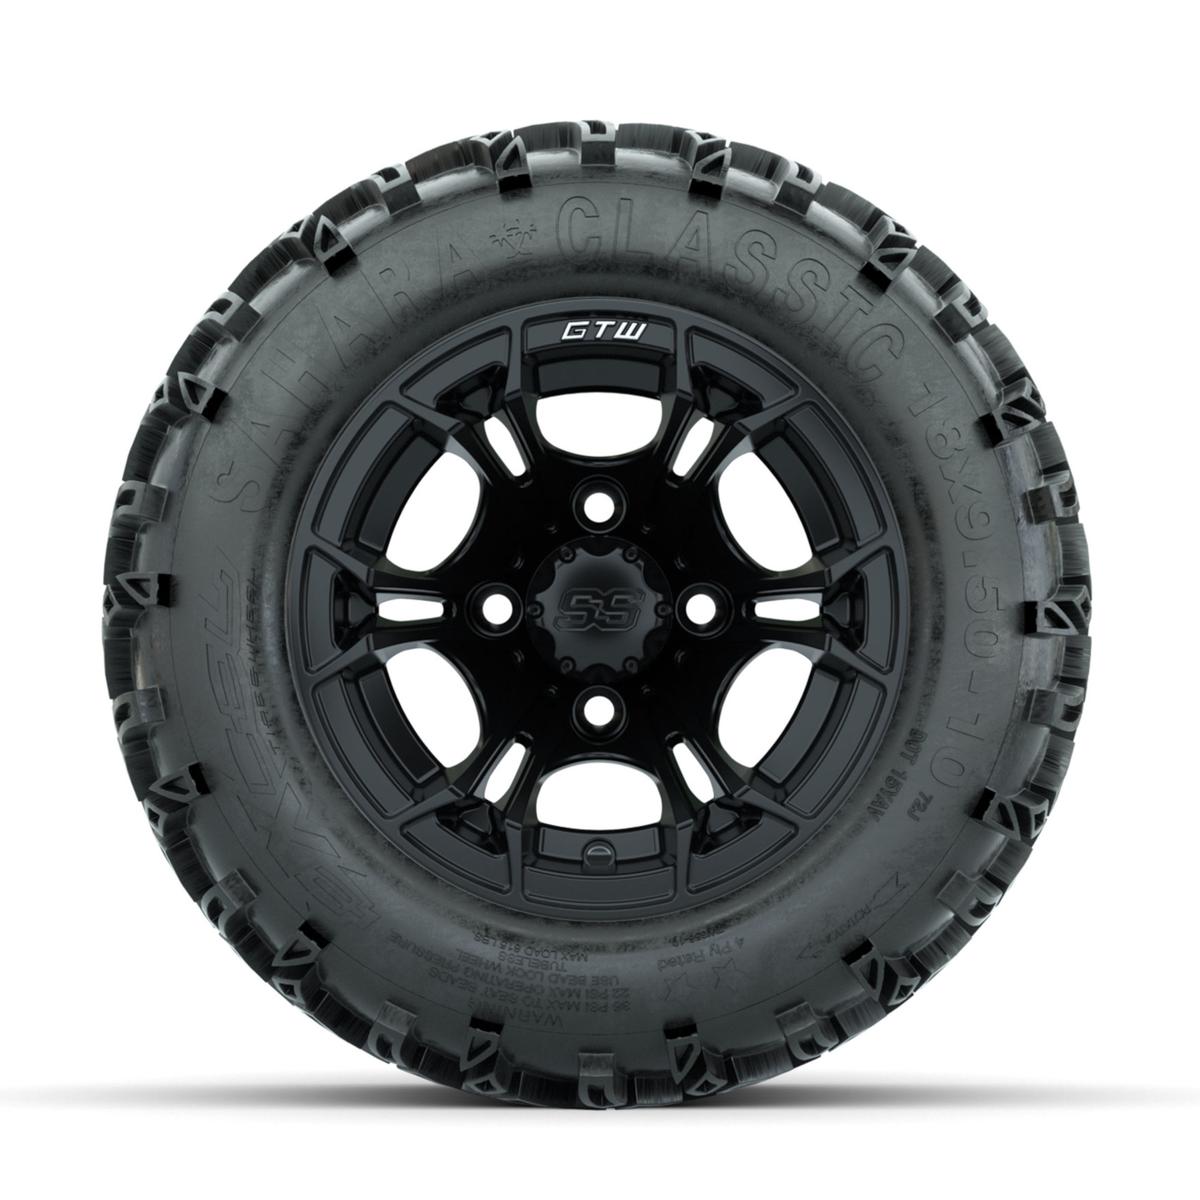 GTW Spyder Matte Black 10 in Wheels with 18x9.50-10 Sahara Classic All Terrain Tires – Full Set